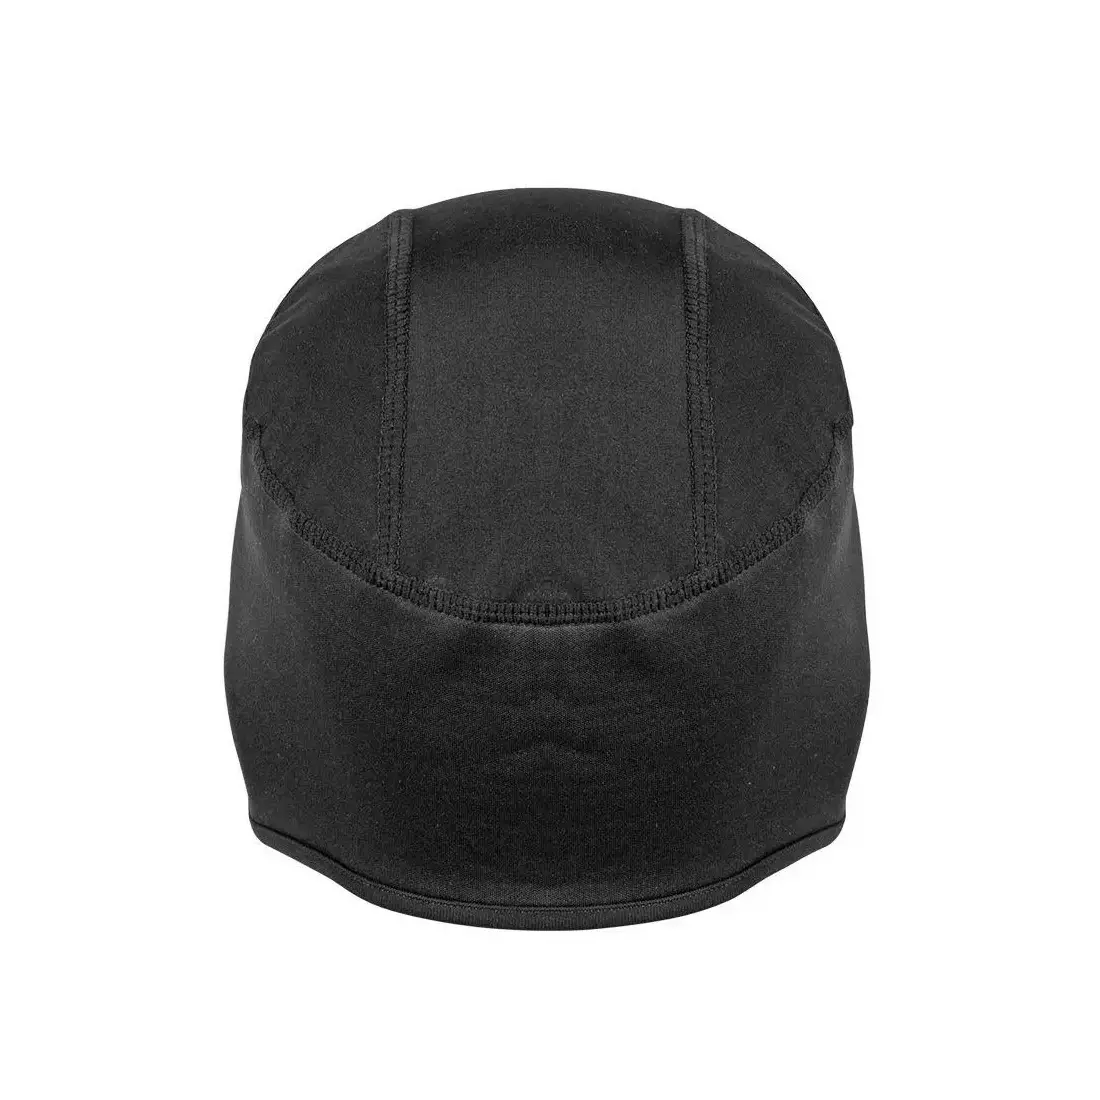 Rockbros helmet cap Softshell black LF041BK